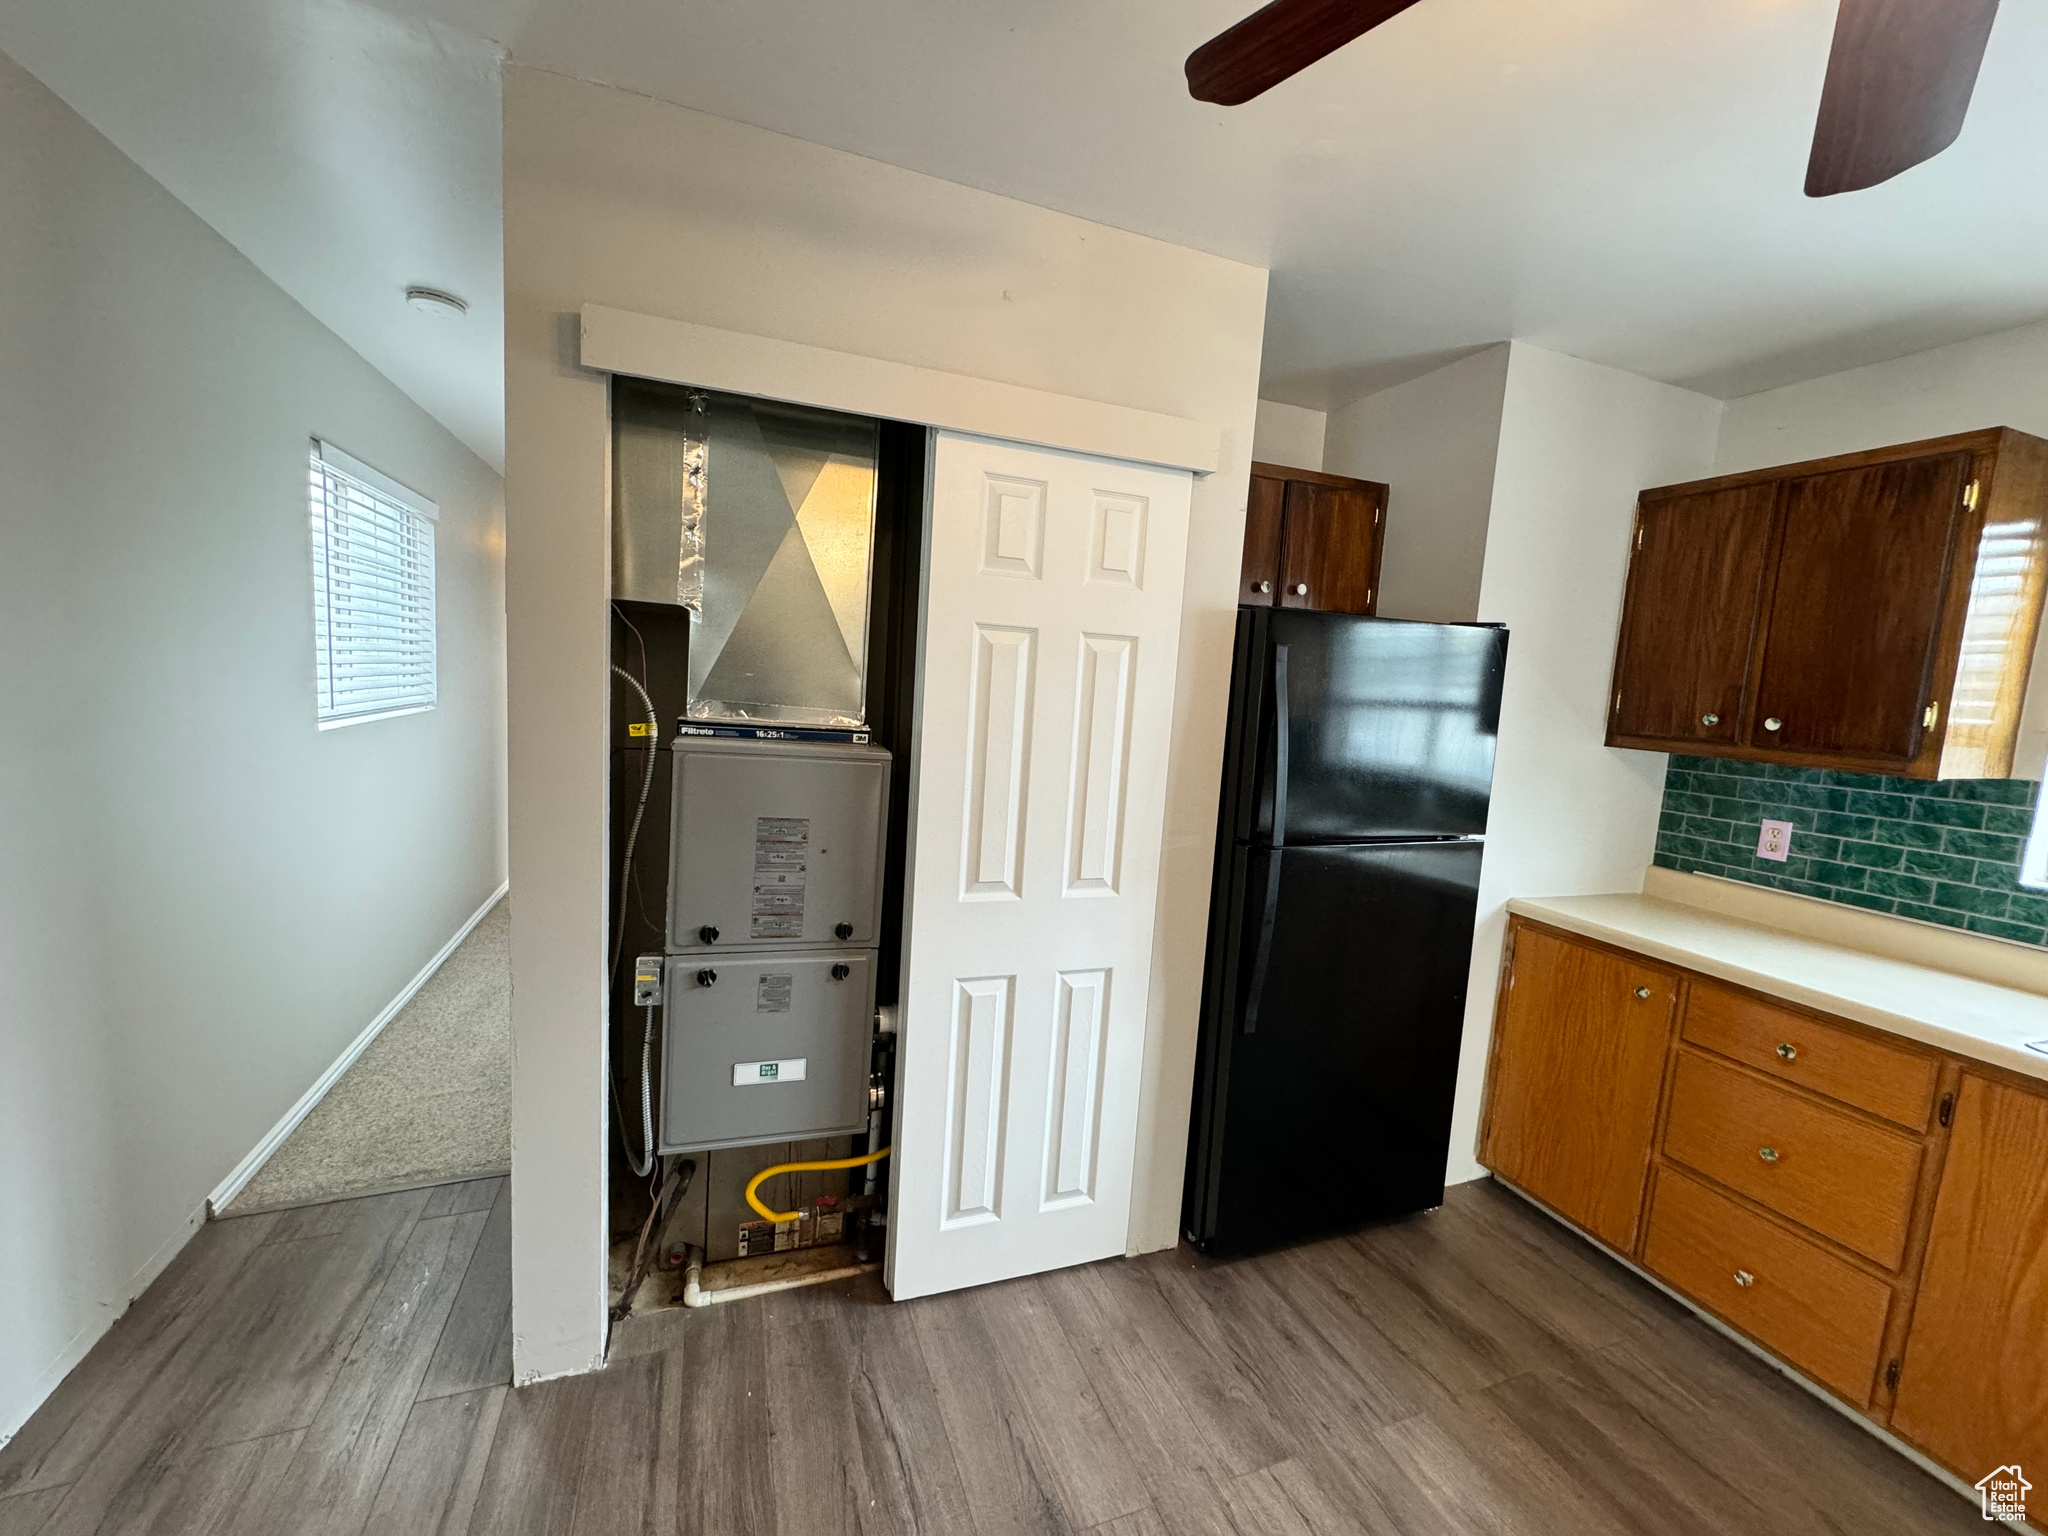 Kitchen with black refrigerator, ceiling fan, tasteful backsplash, and wood-type flooring